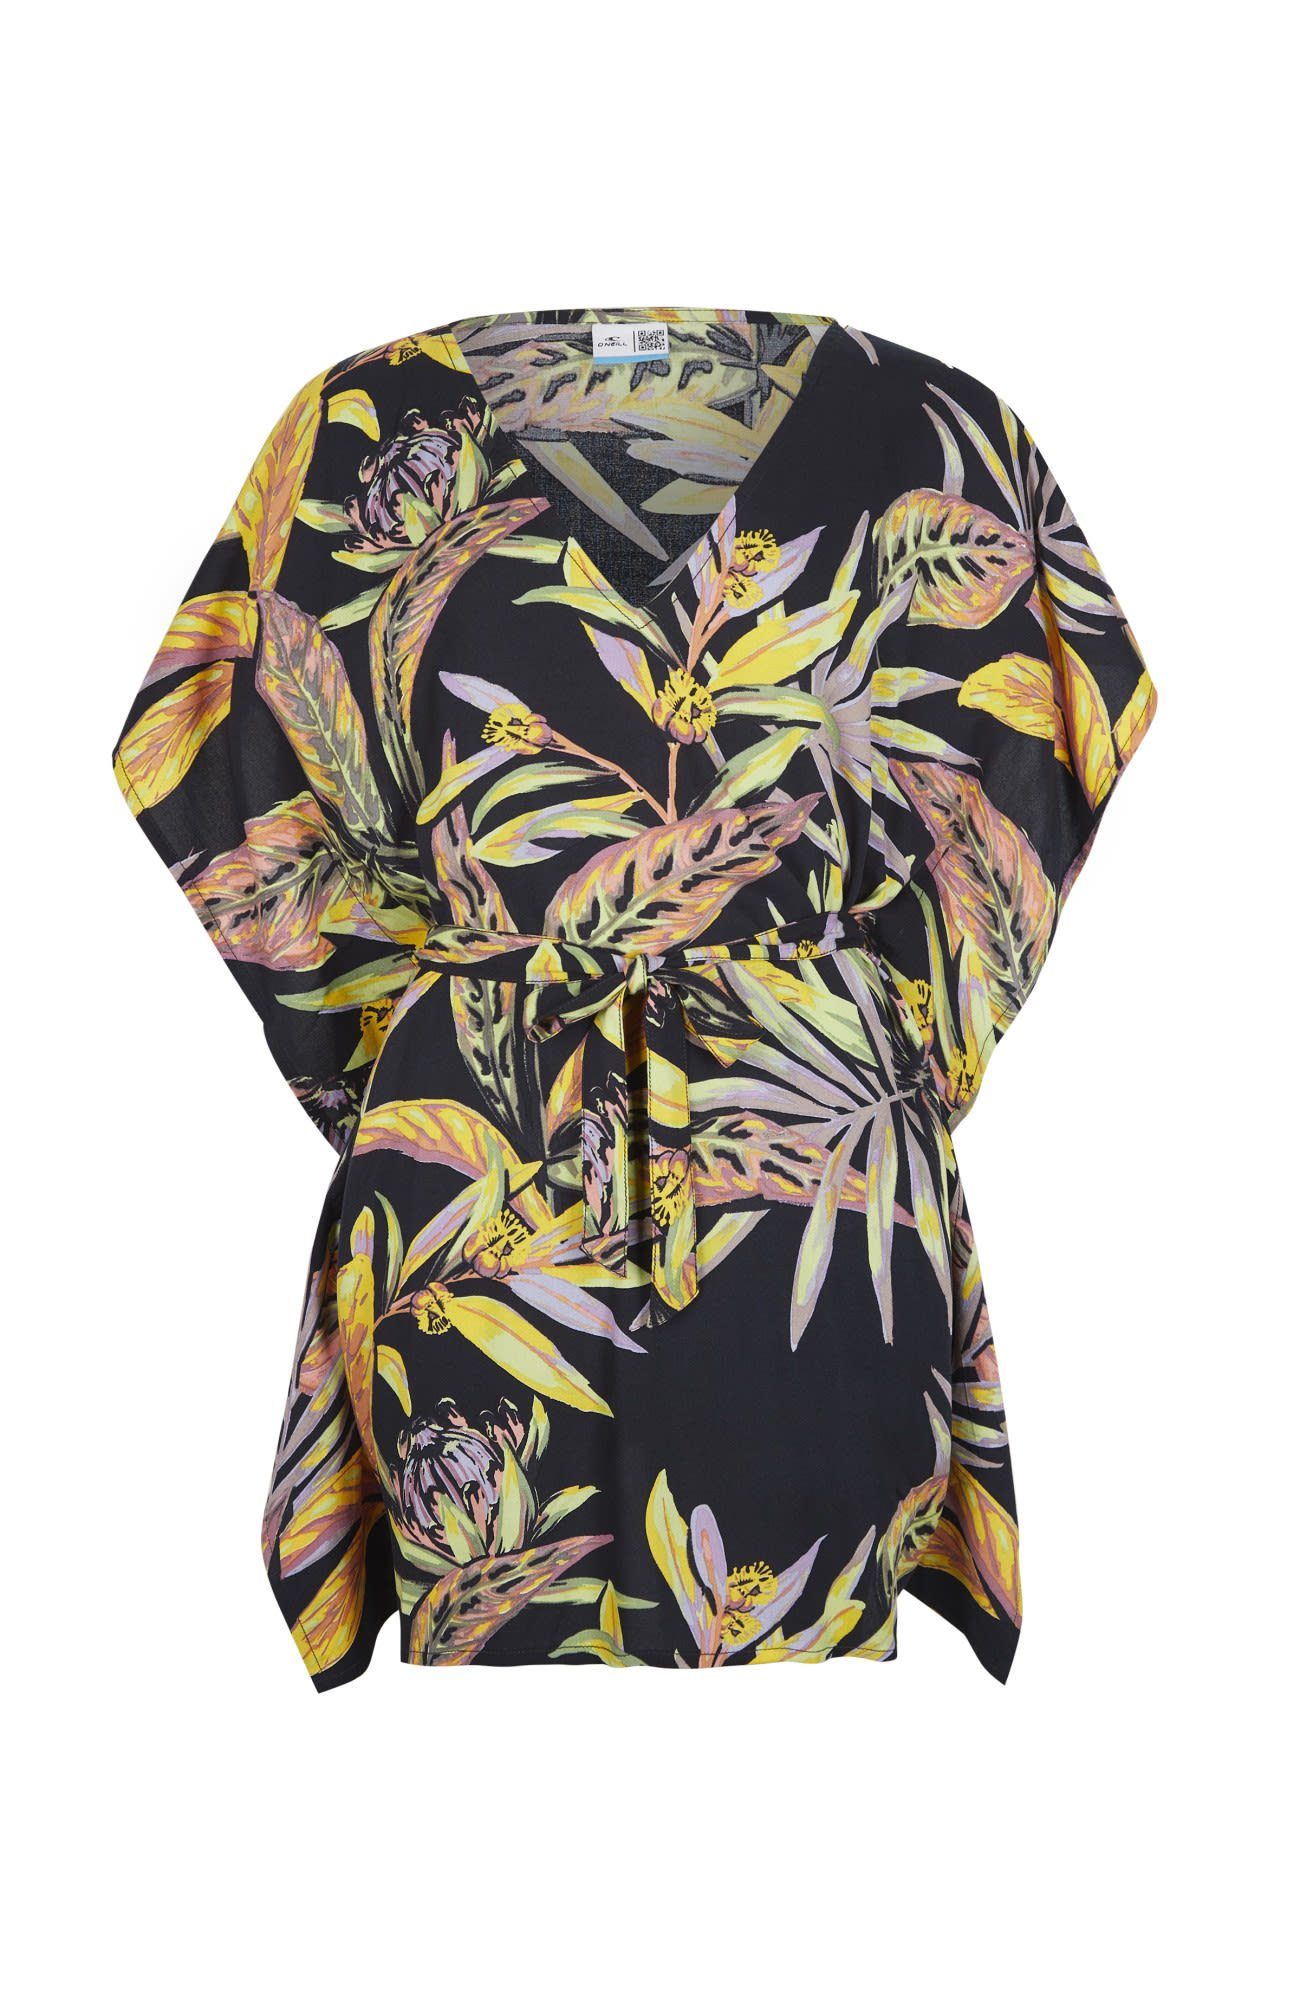 Sonderangebotsangebote O'Neill Sommerkleid Beach Black Hana Cover Up Flower Oneill W Damen Tropical Kleid